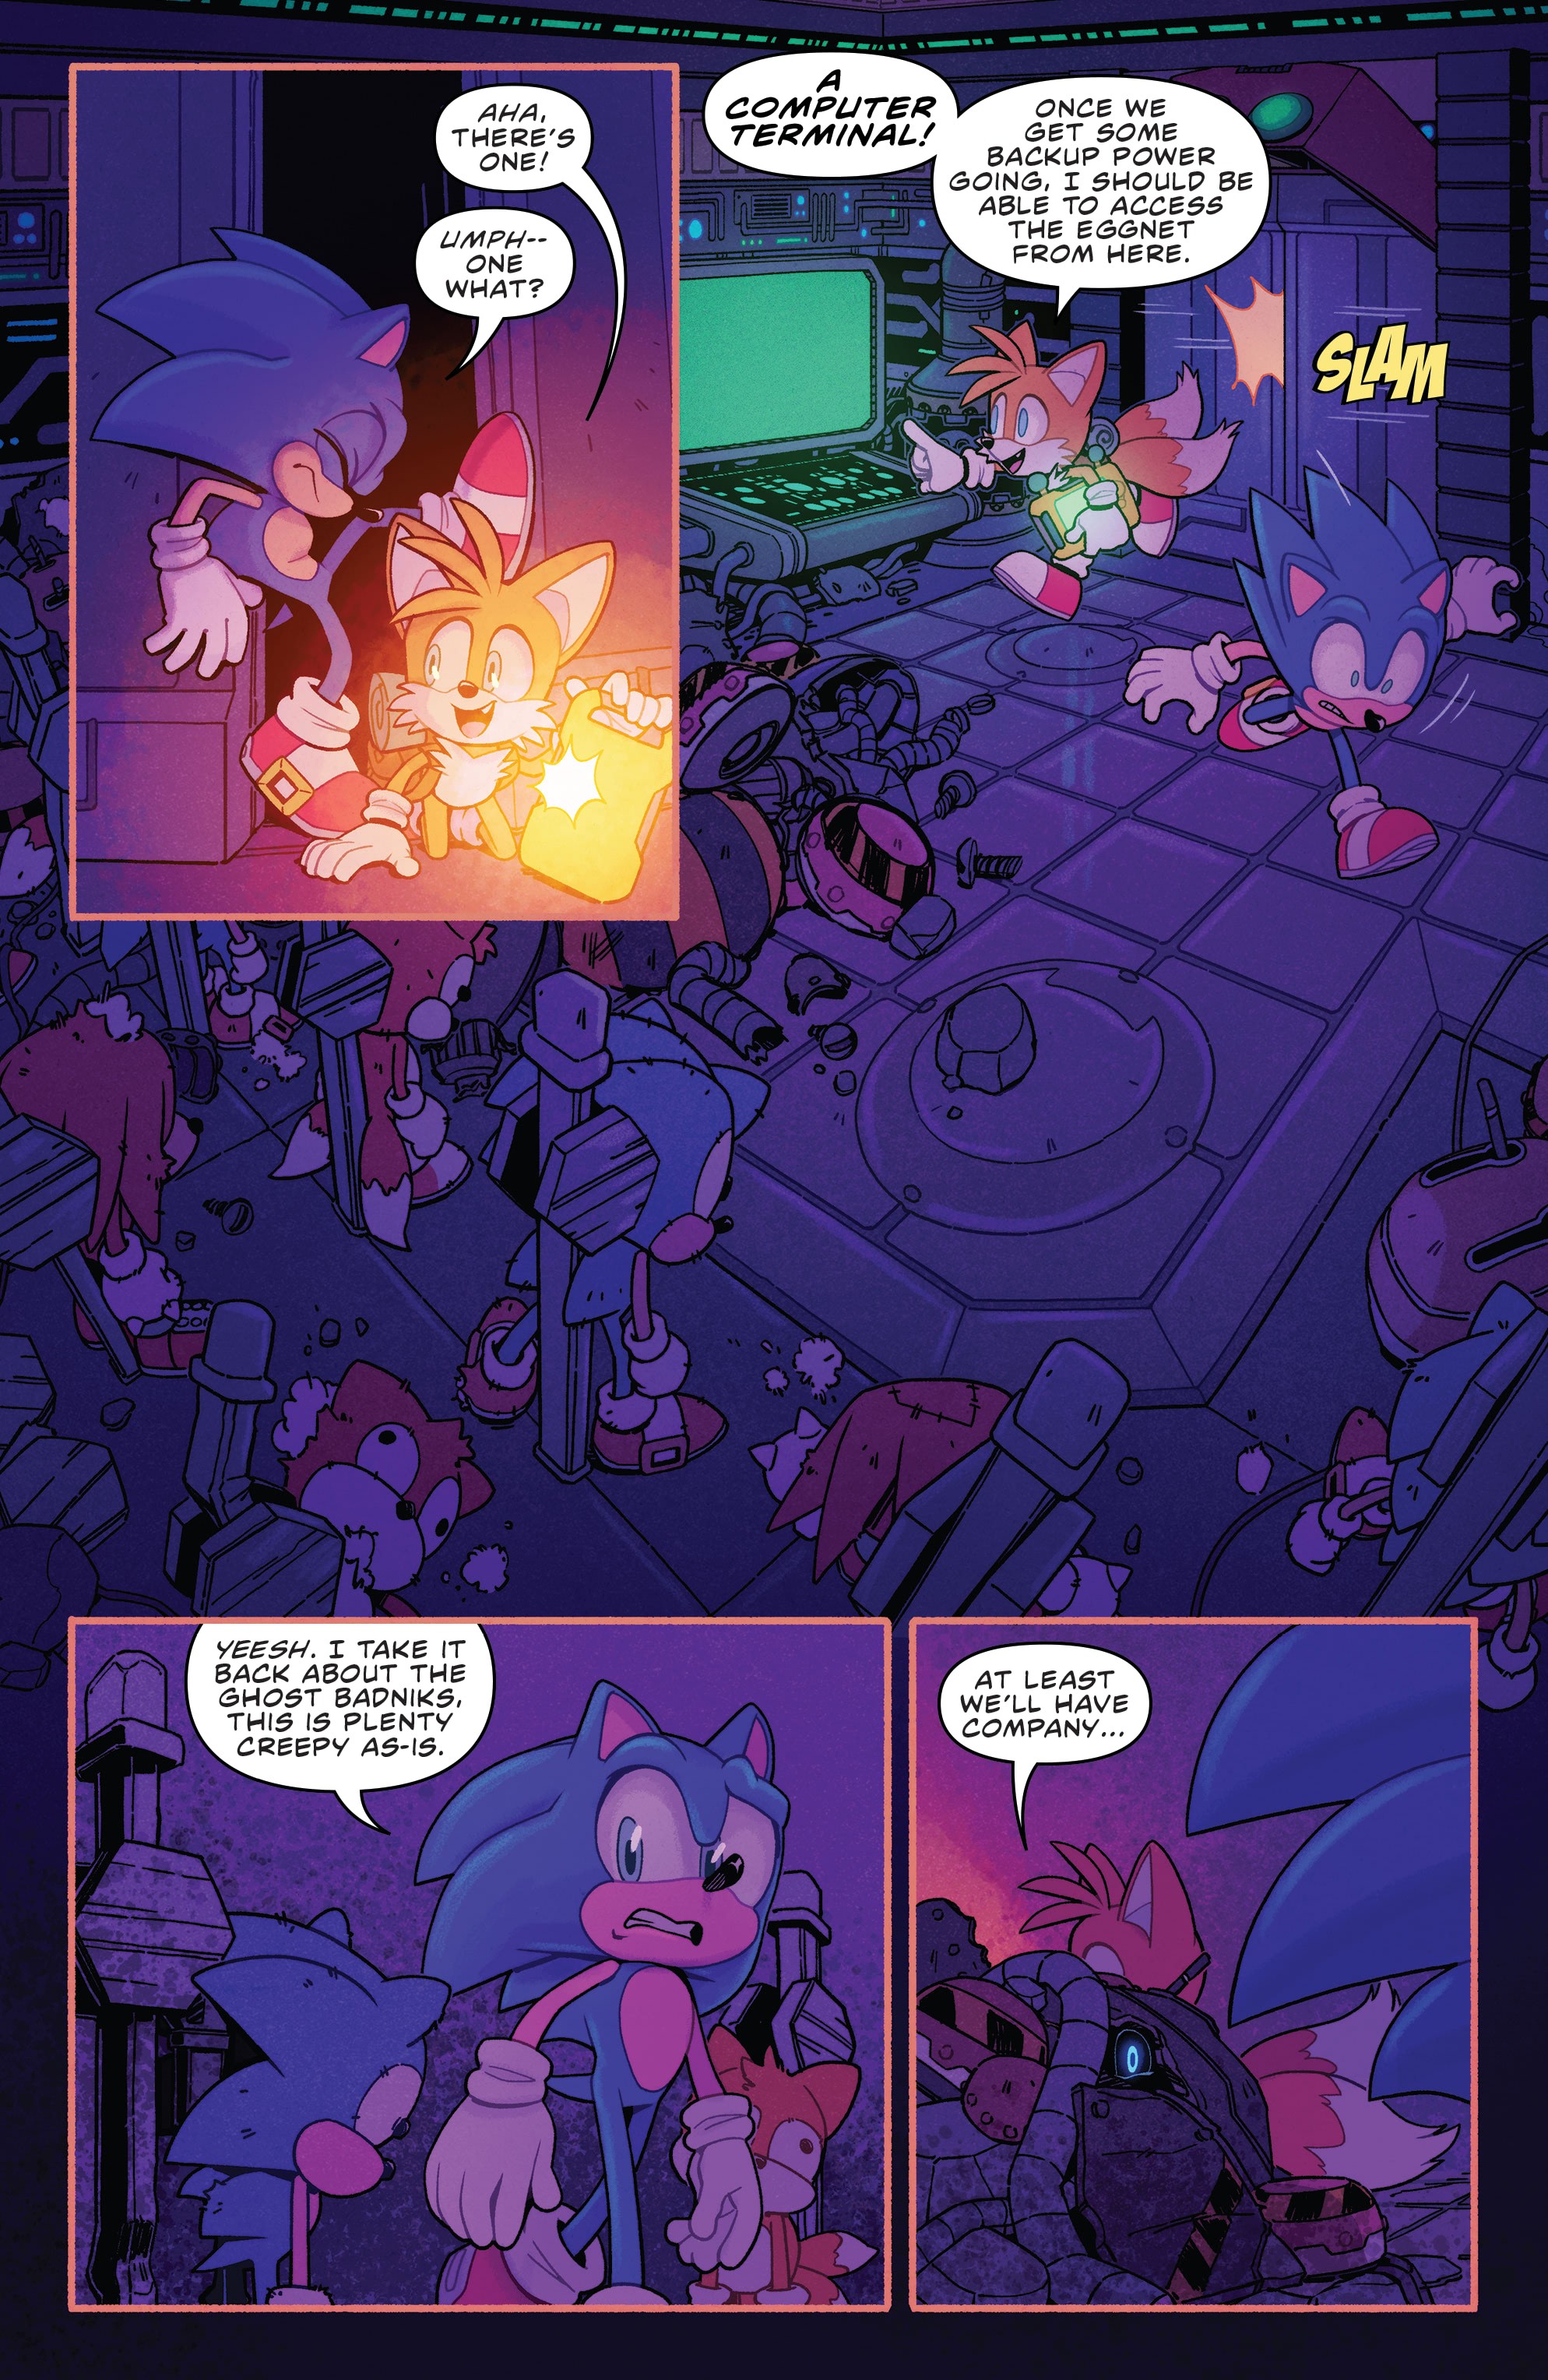 Sonic the Comic #33 VG ; Fleetway Quality